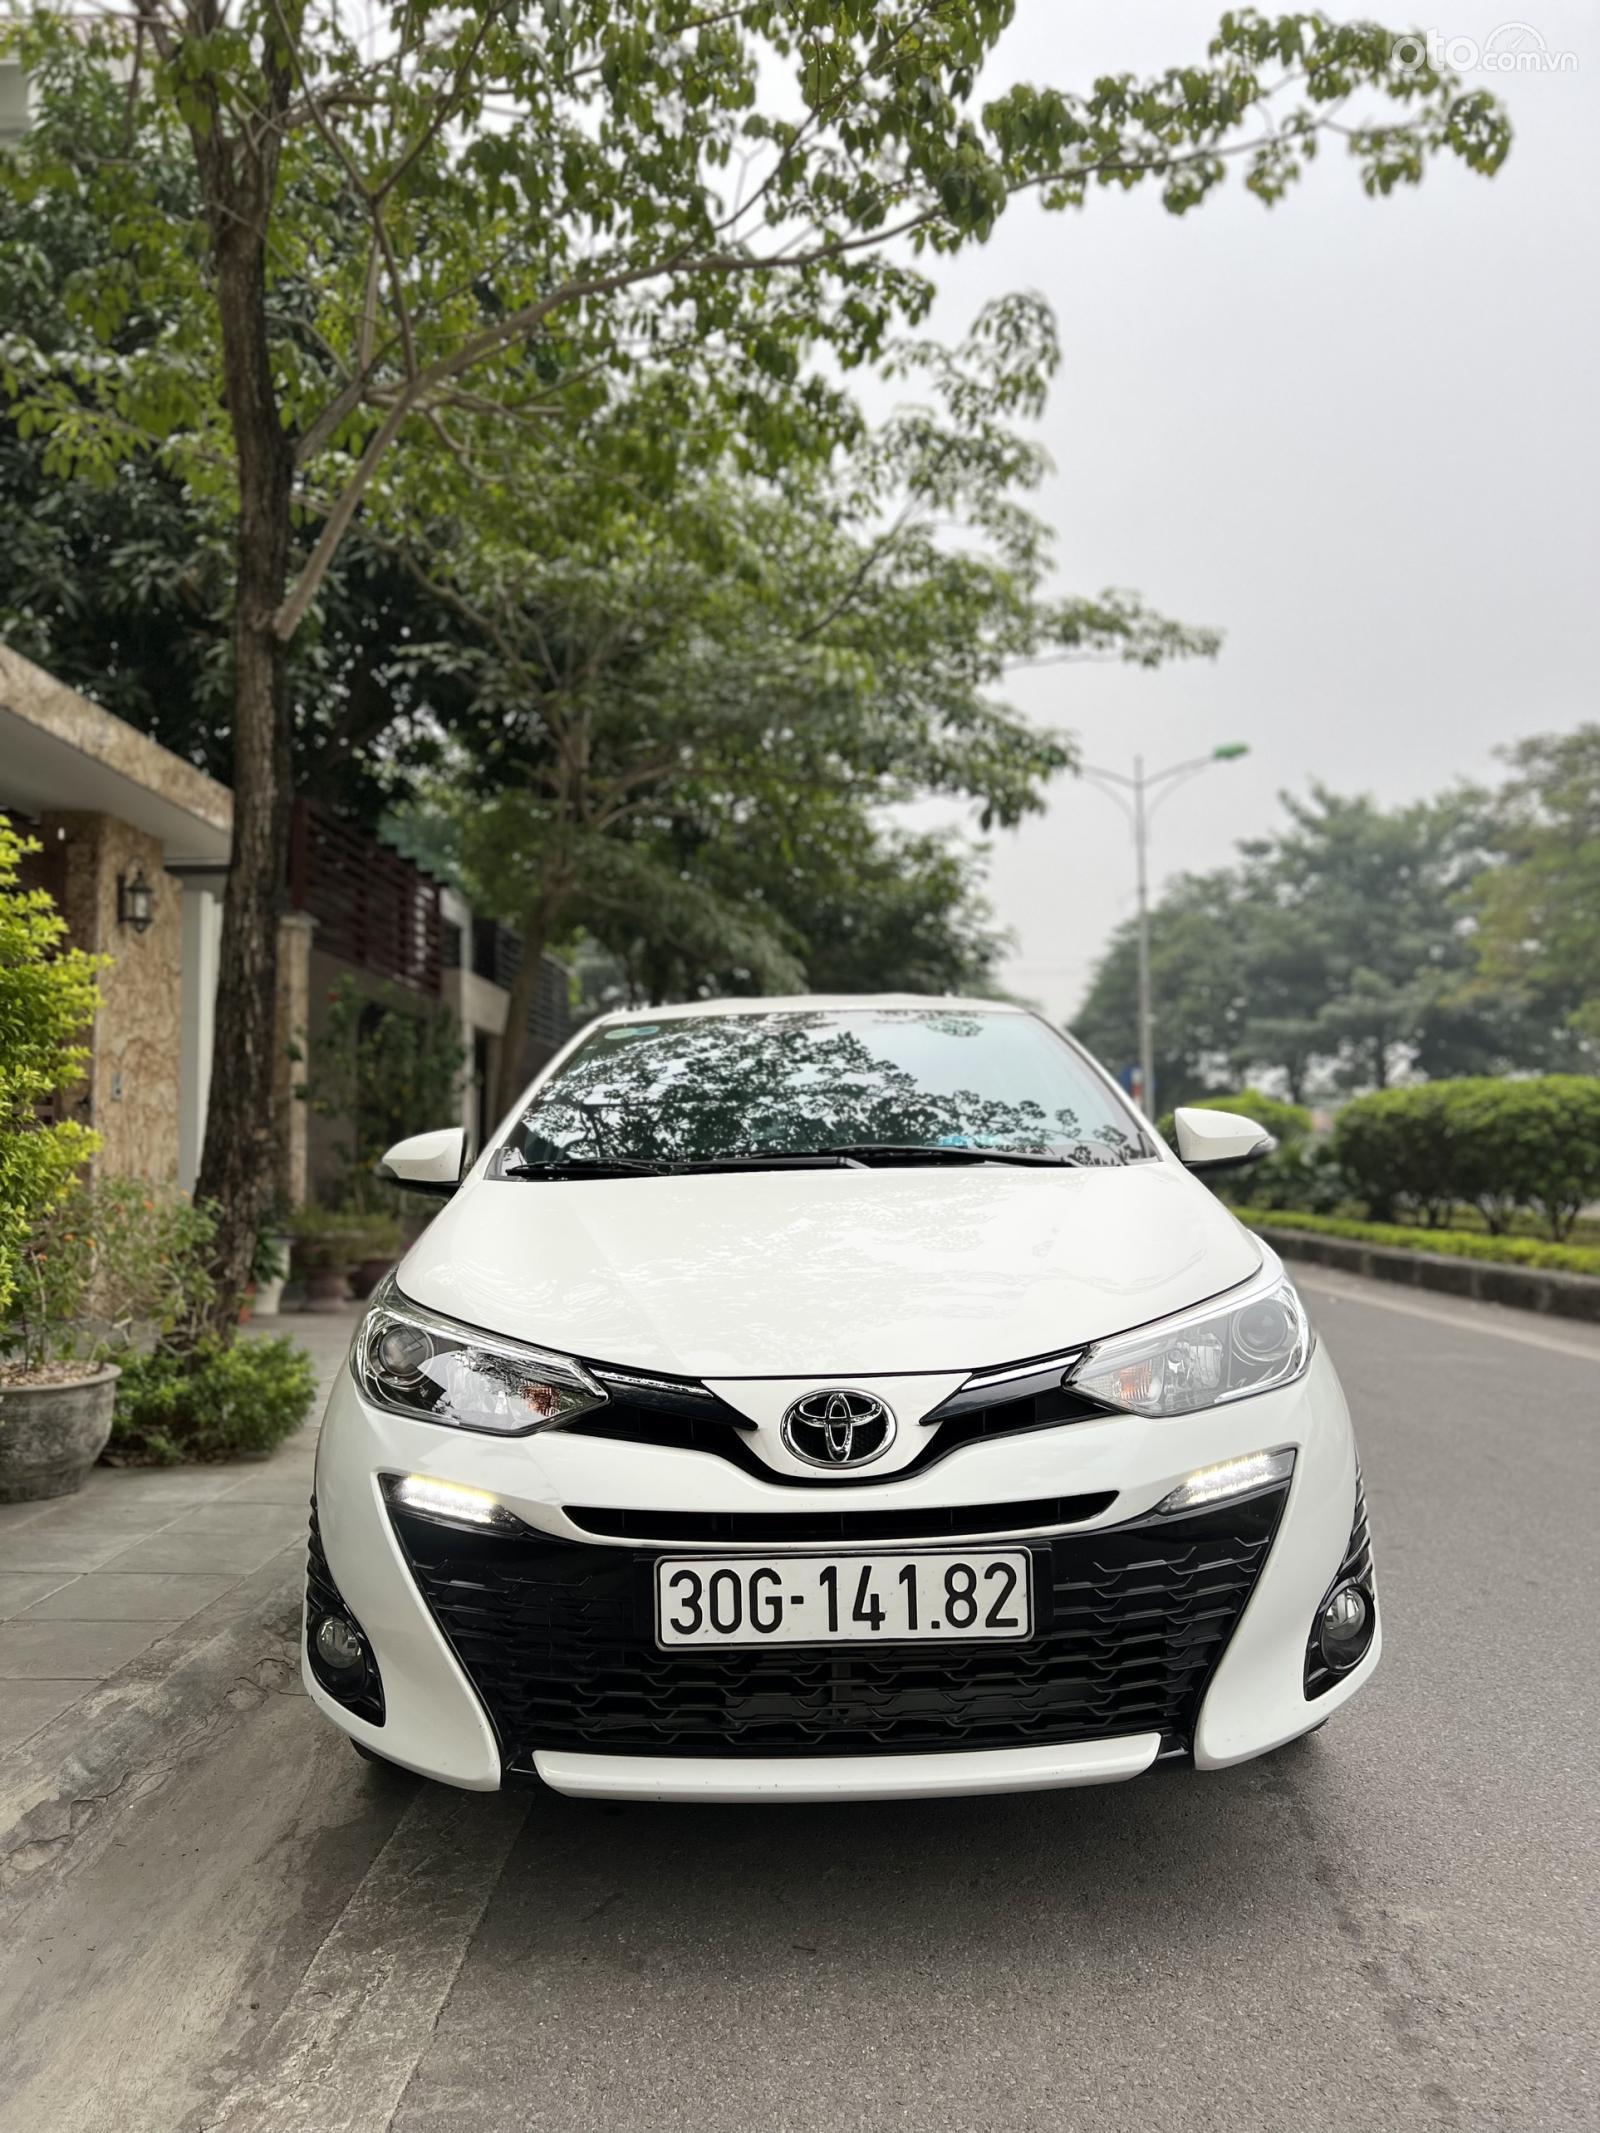 Bán xe Toyota Yaris 1.5G sản xuất năm 2019